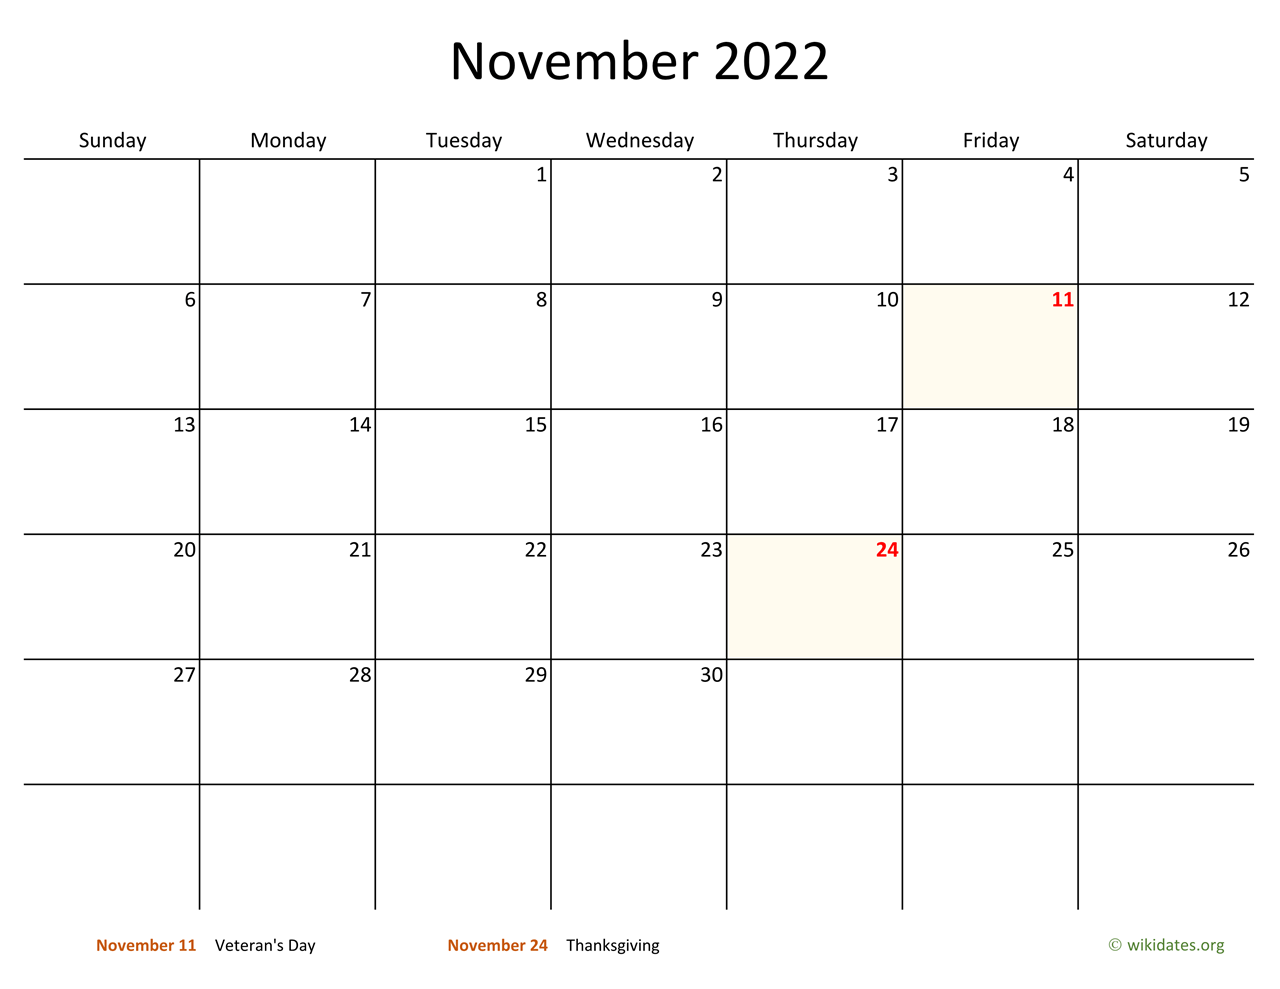 Nov 2022 Calendar November 2022 Calendar With Bigger Boxes | Wikidates.org